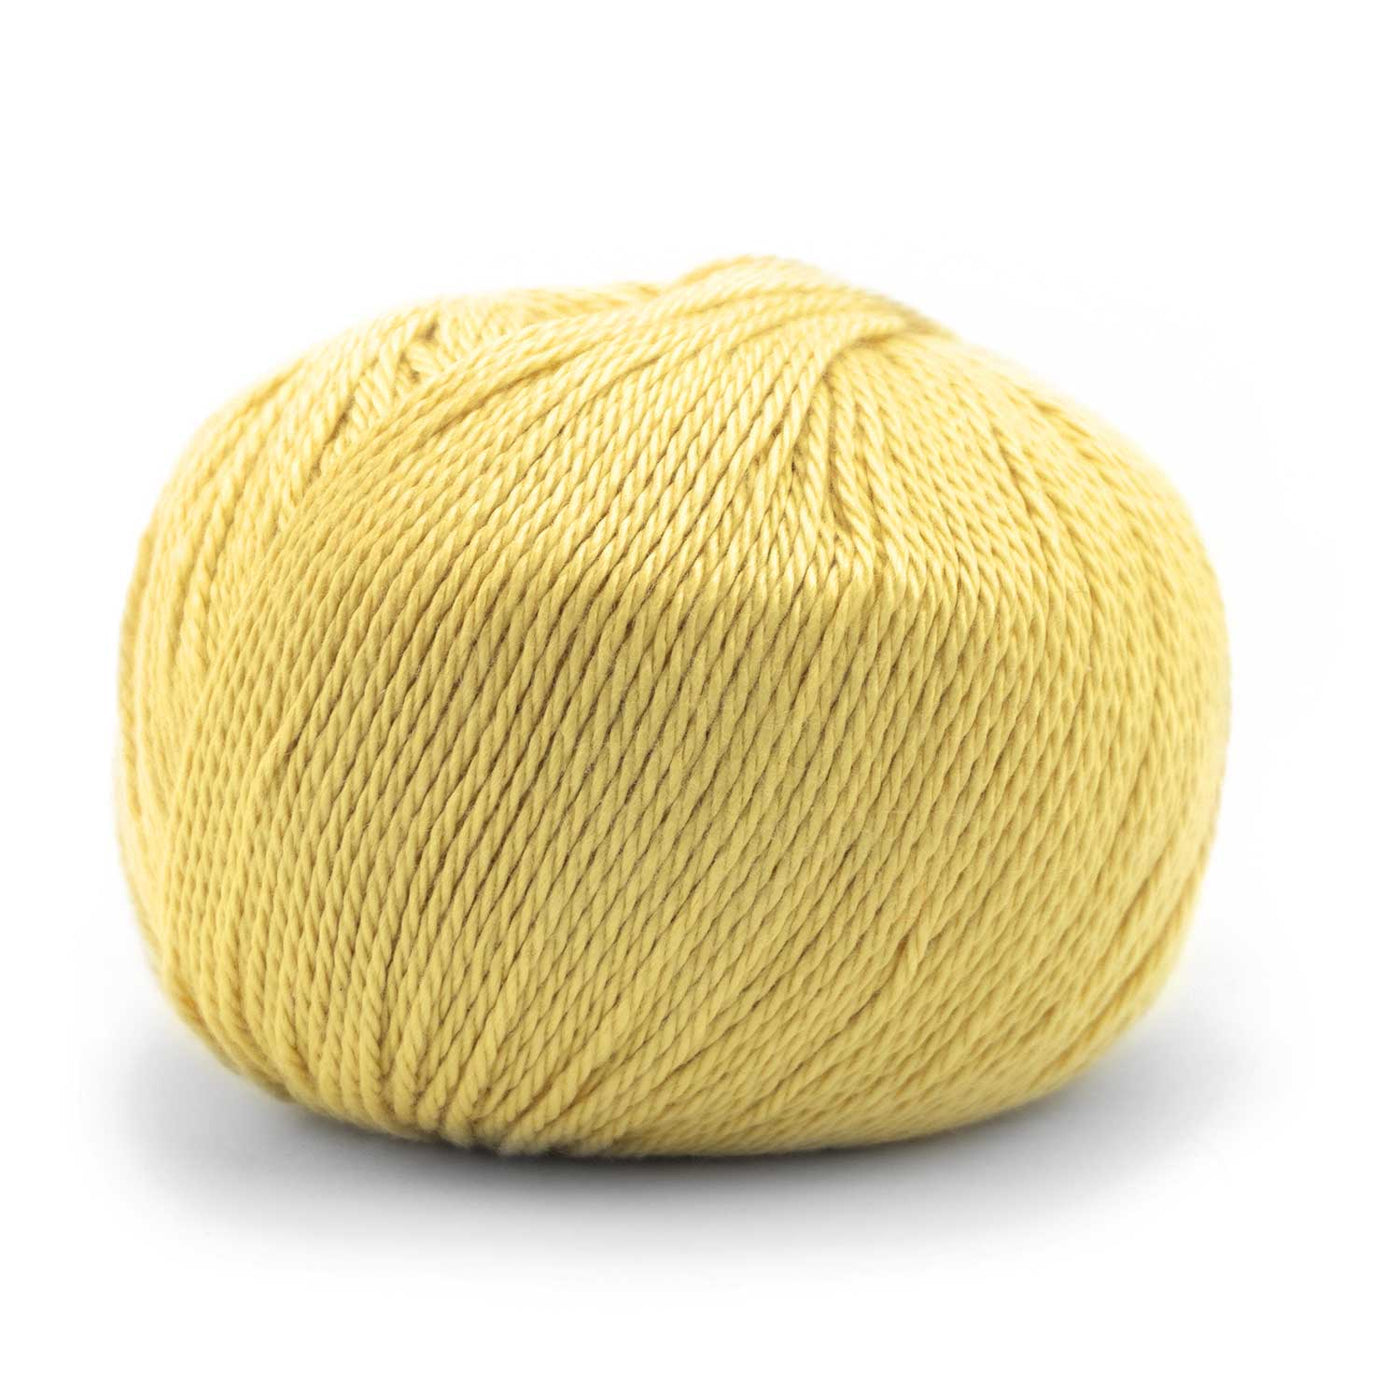 Pascuali Cumbria Sport Cotton Bamboo Knitting Yarn